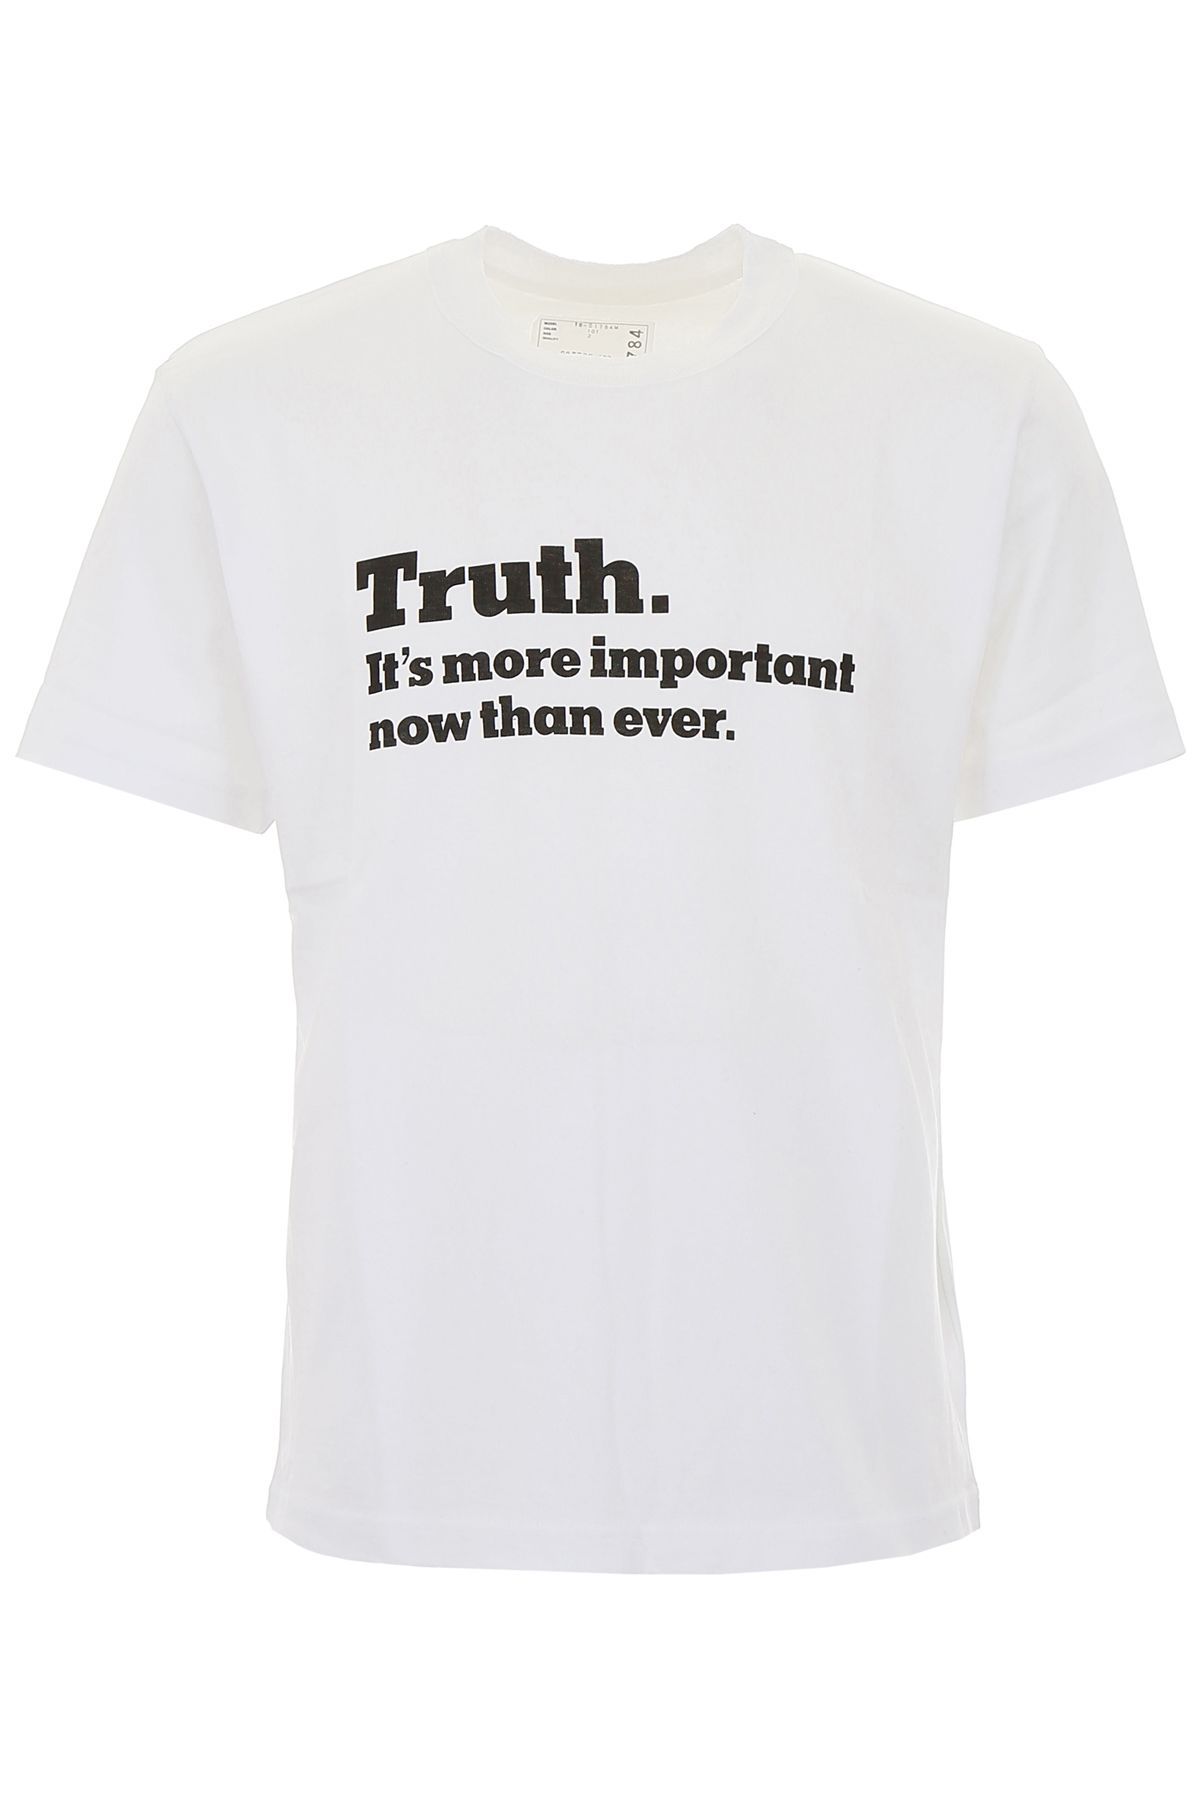 Sacai Truth T-shirt | Italist.com US